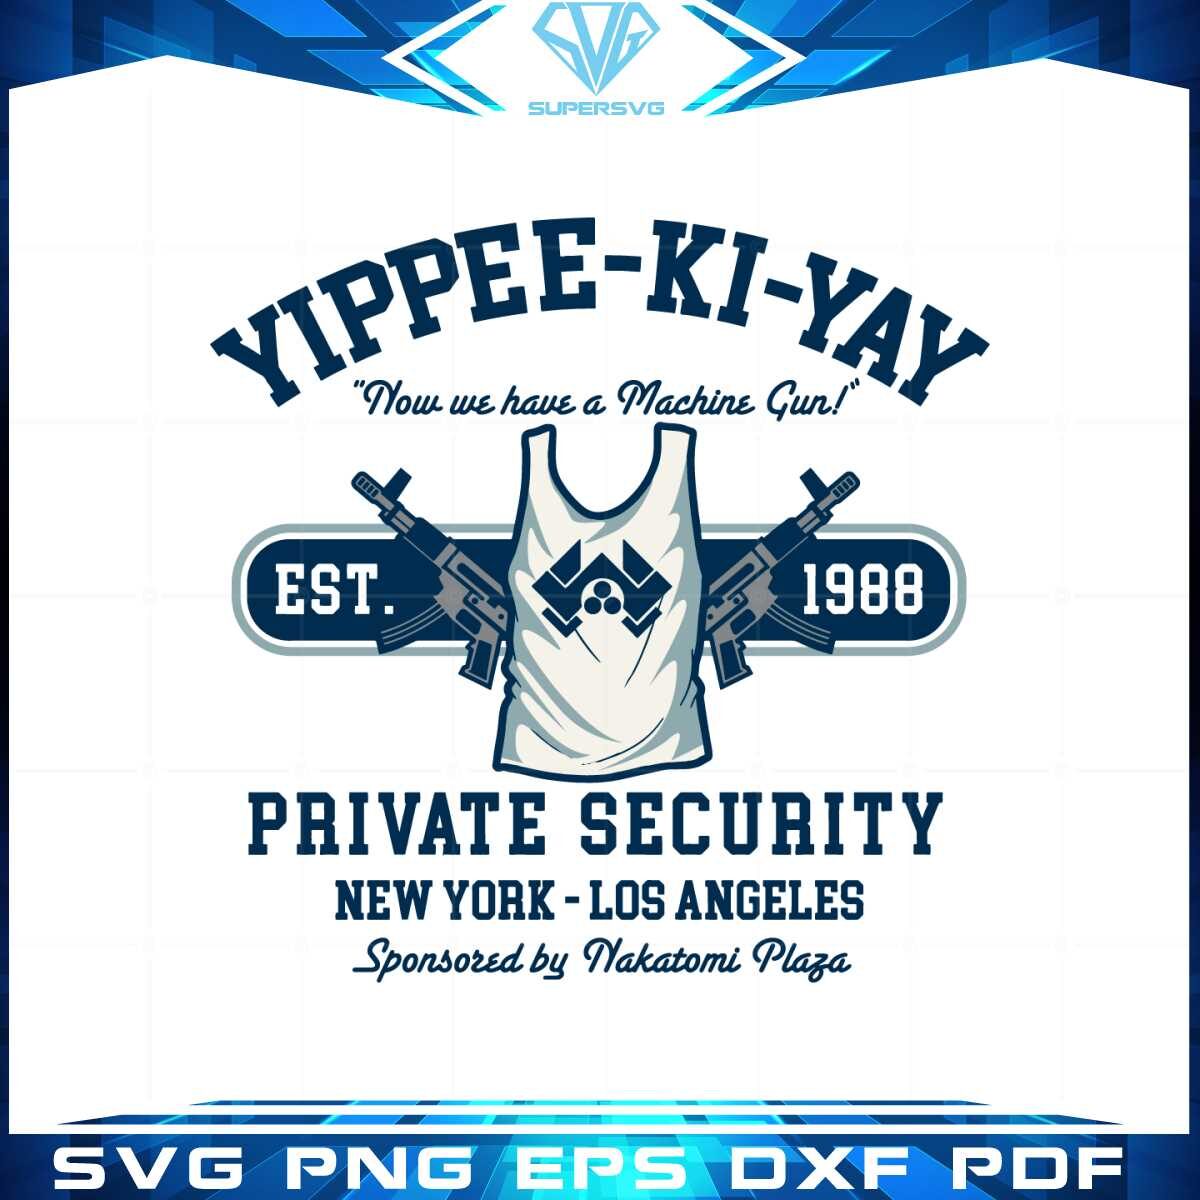 yippee-ki-yay-security-nyla-svg-for-cricut-sublimation-files